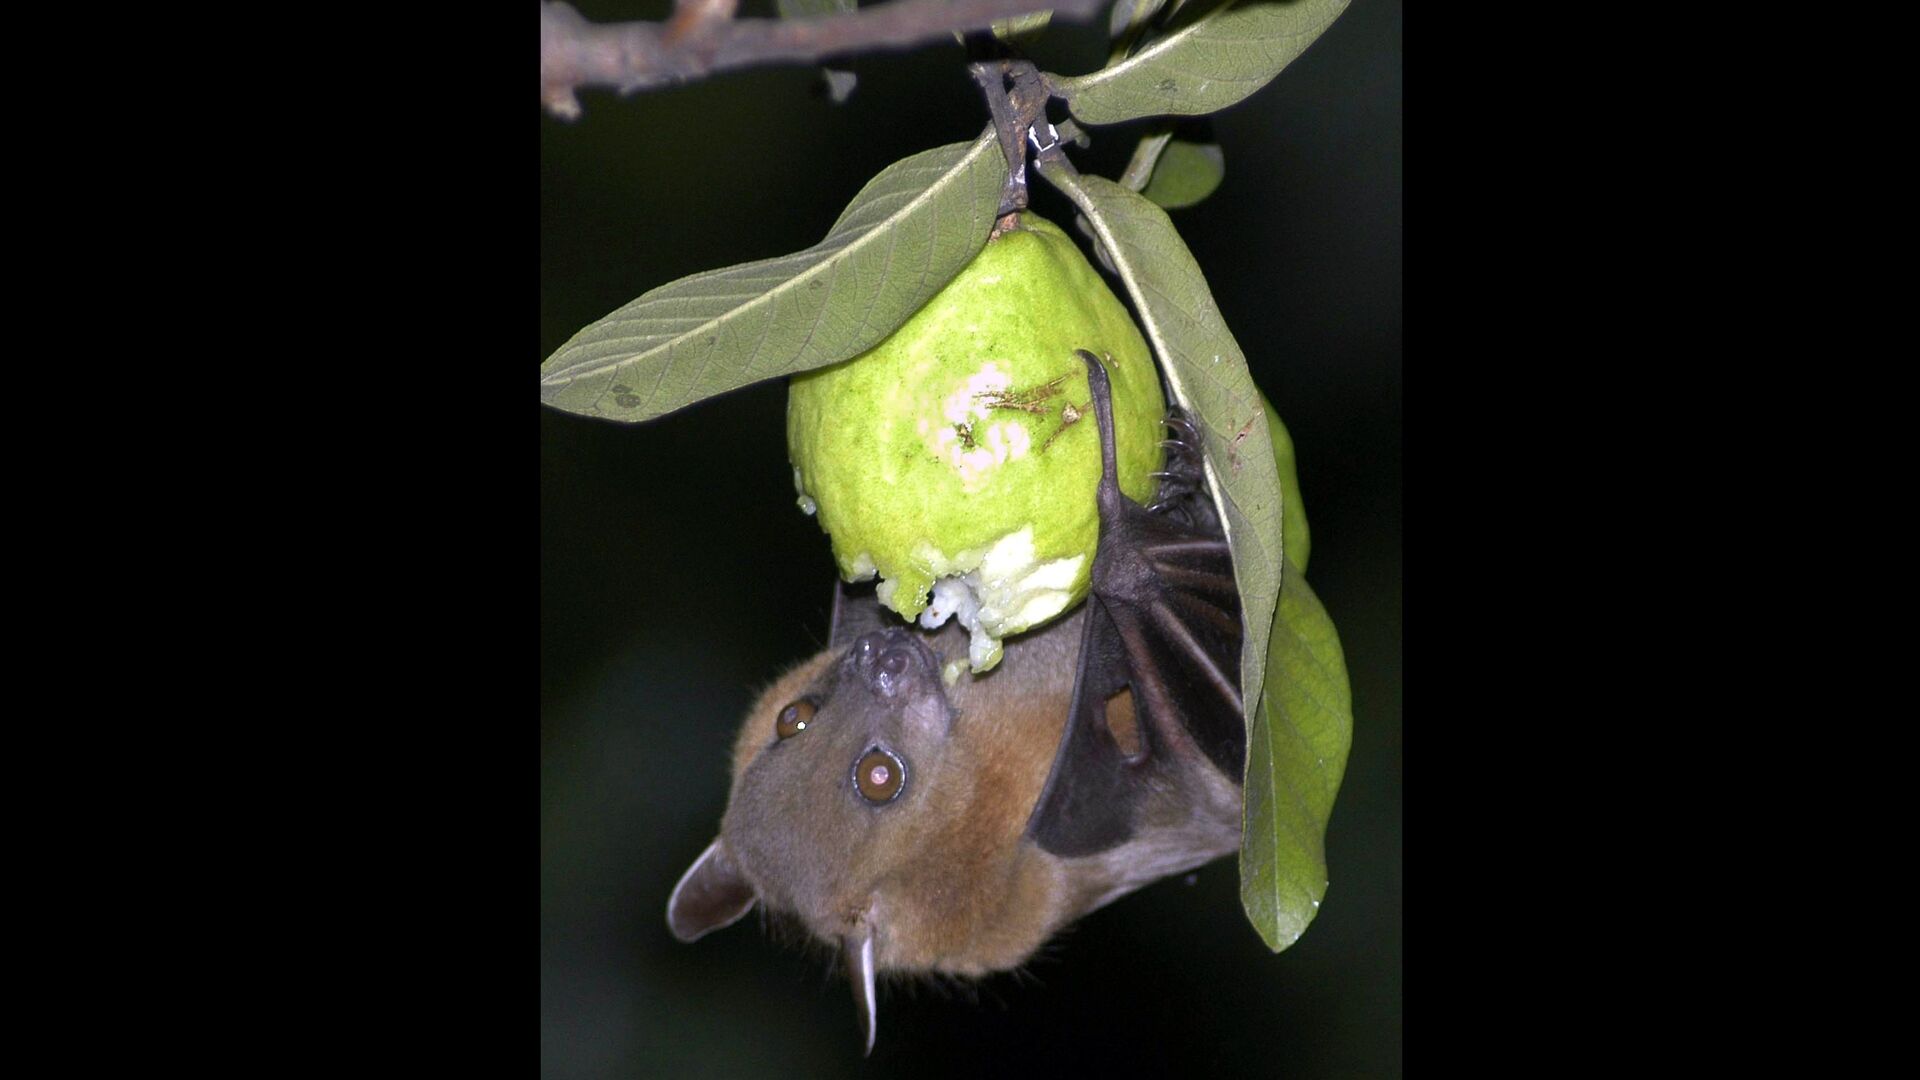 A bat feeds on a guava fruit in Siliguri, India. - Sputnik International, 1920, 13.09.2021